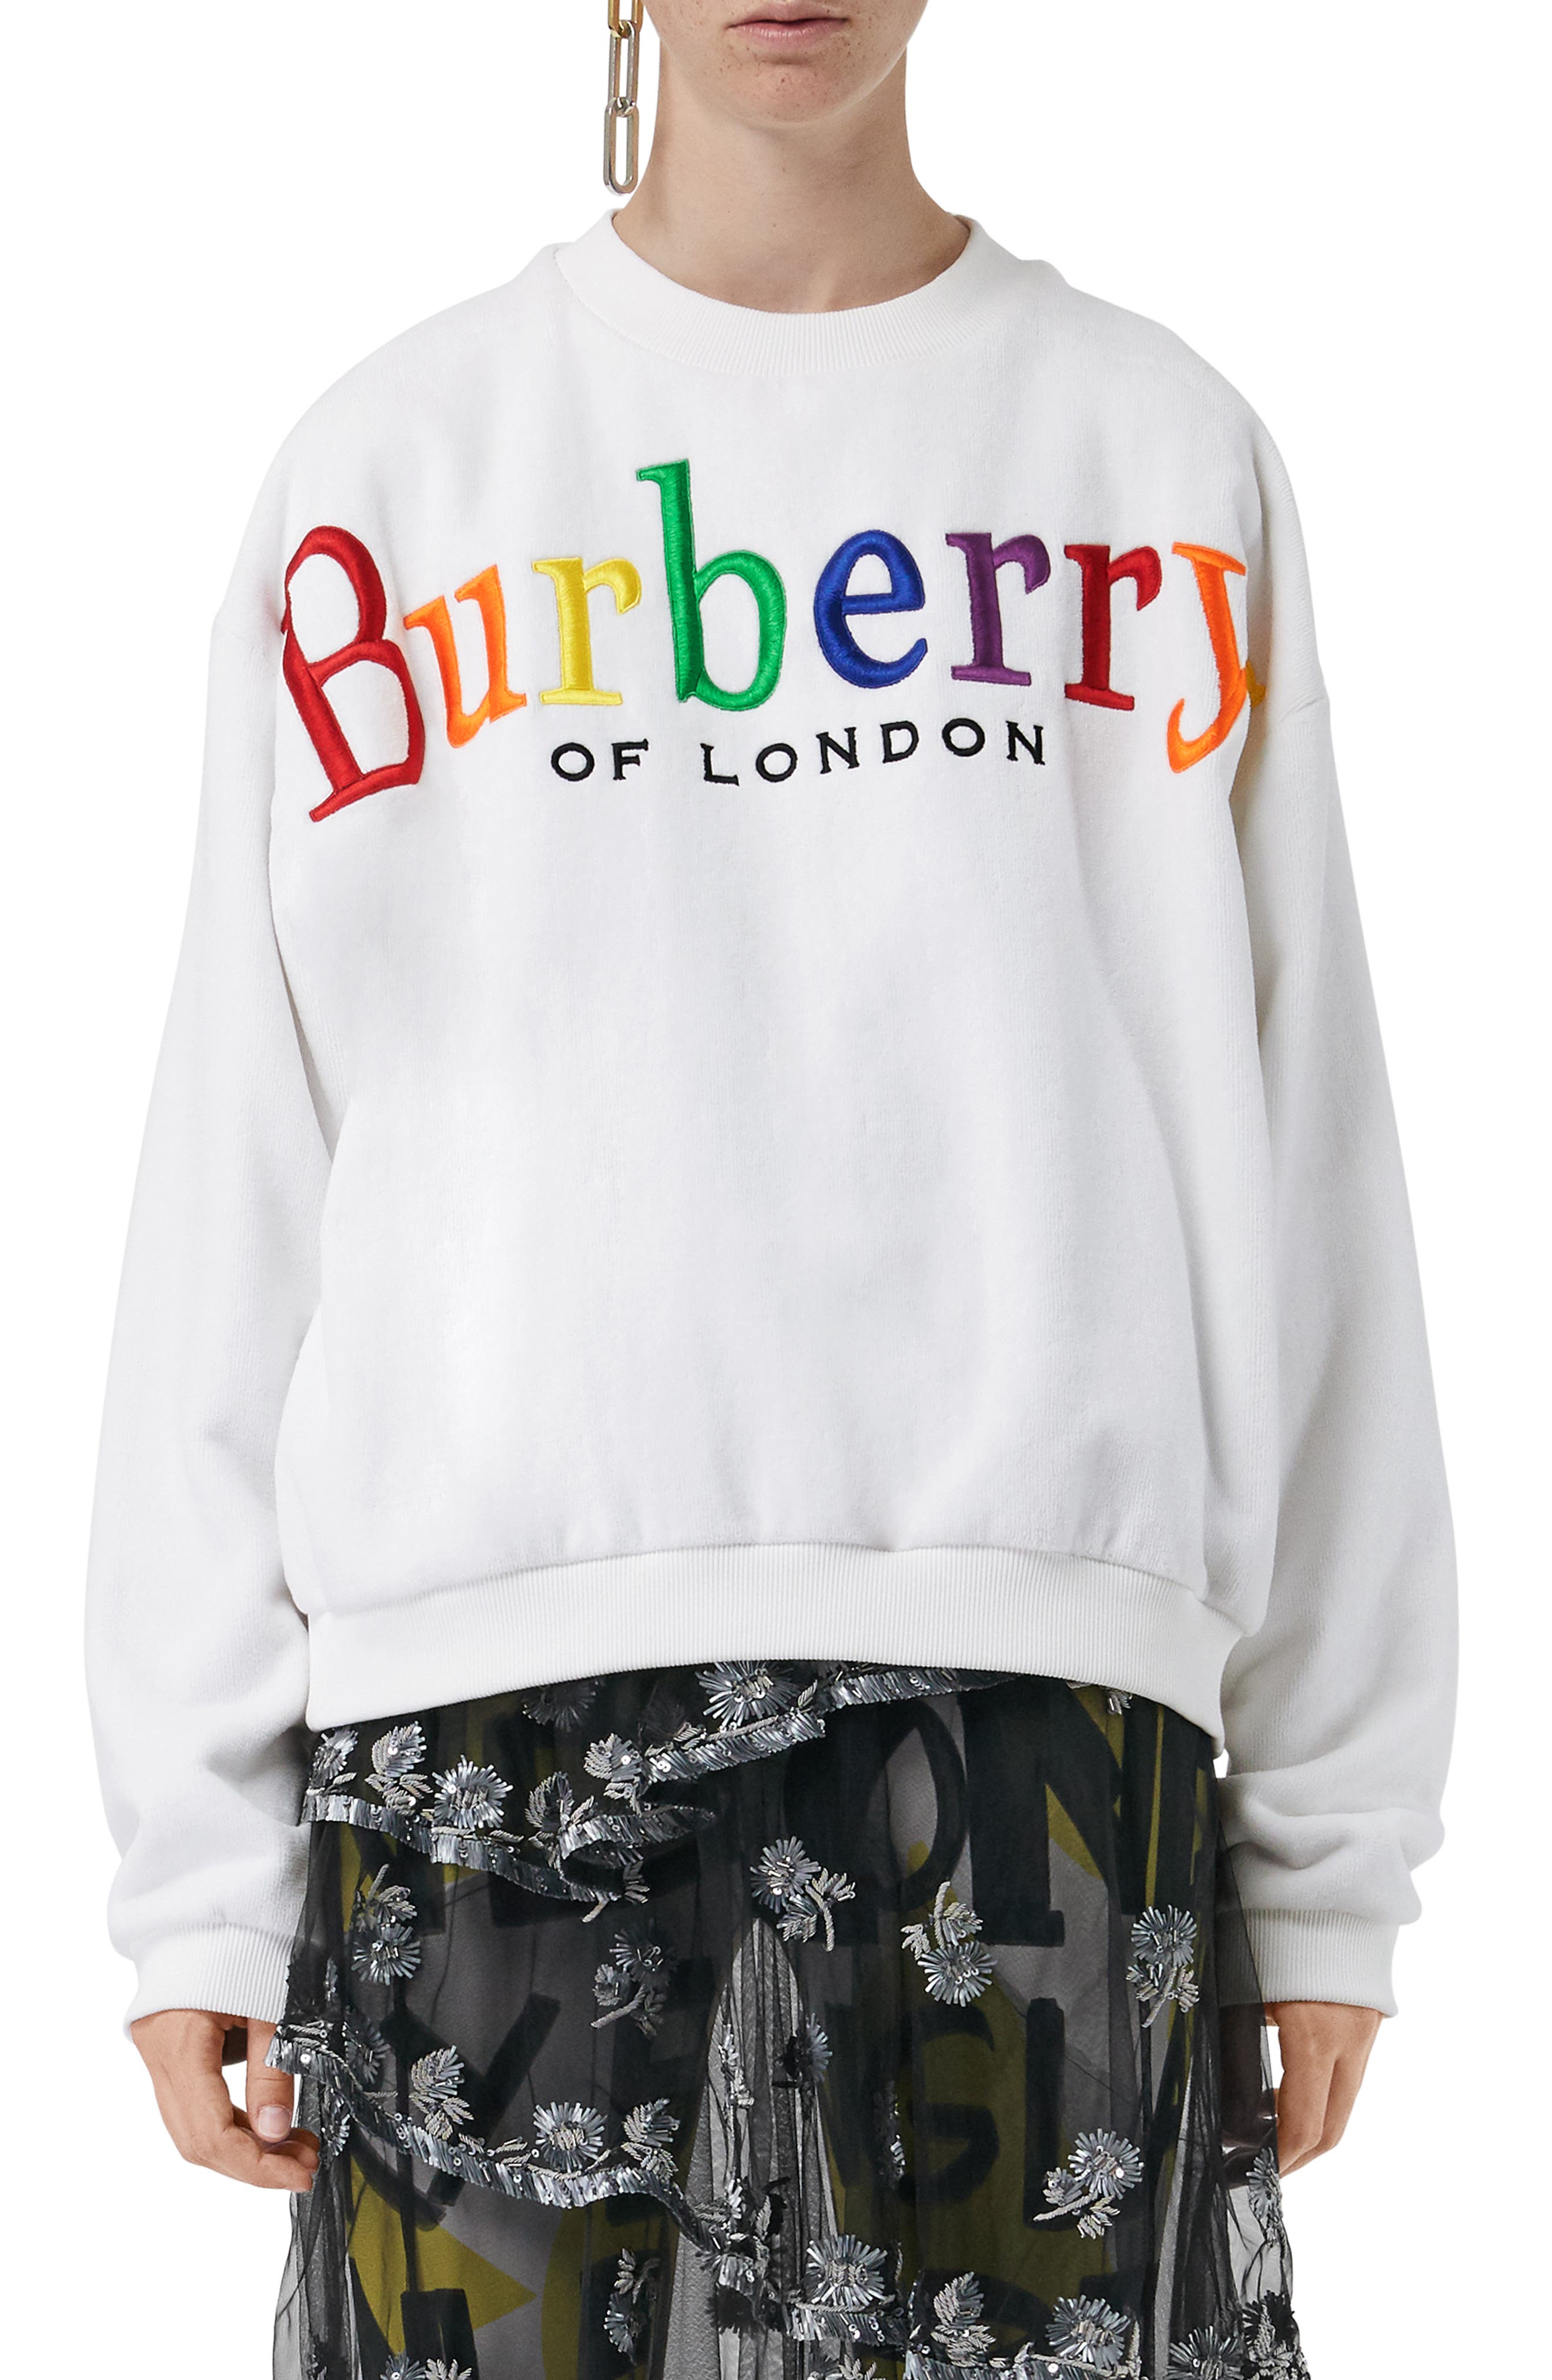 burberry archive logo sweatshirt